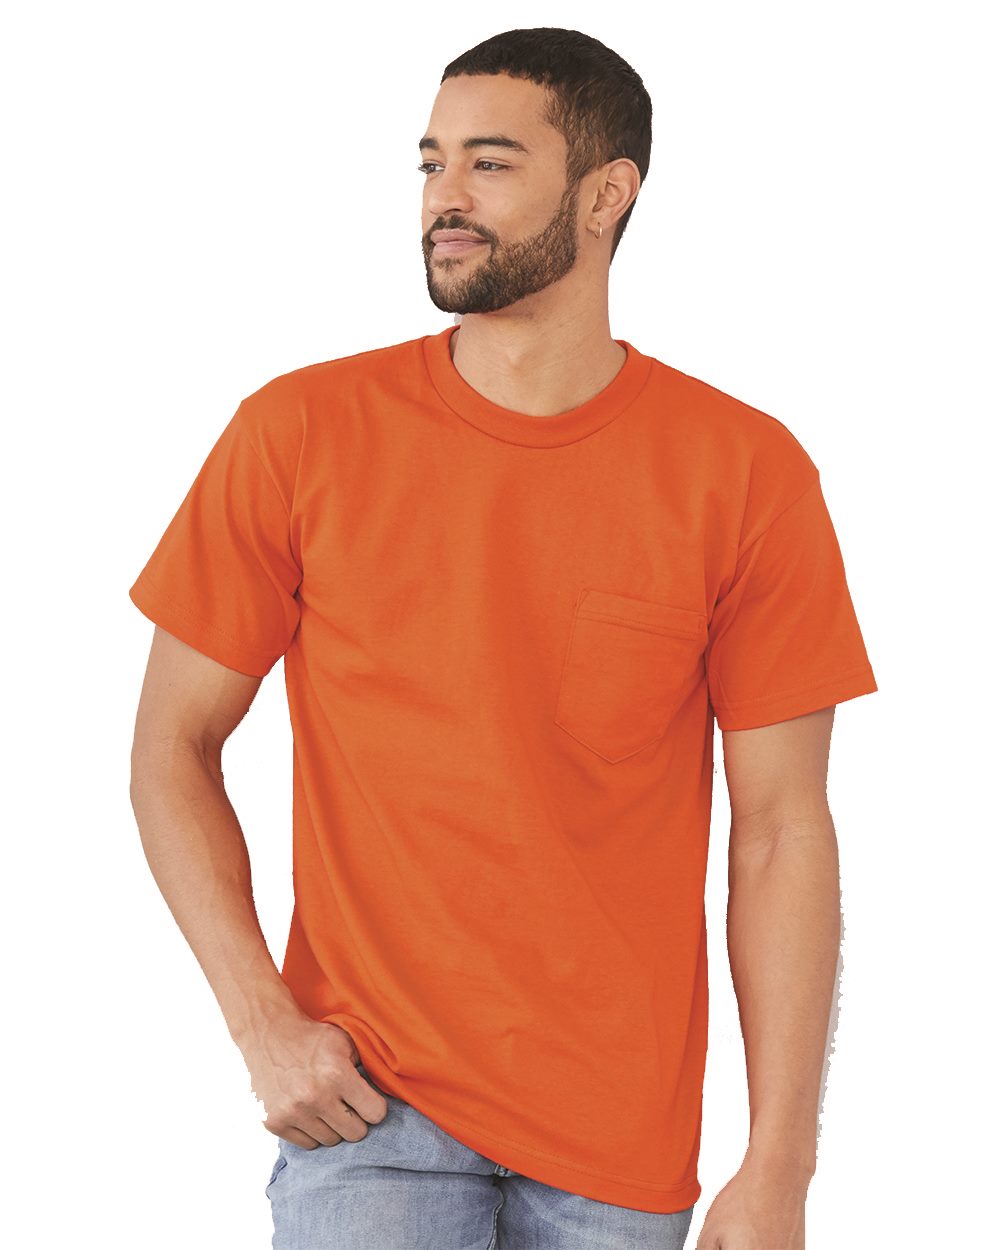 Bayside 3015 - Union-Made Pocket T-Shirt